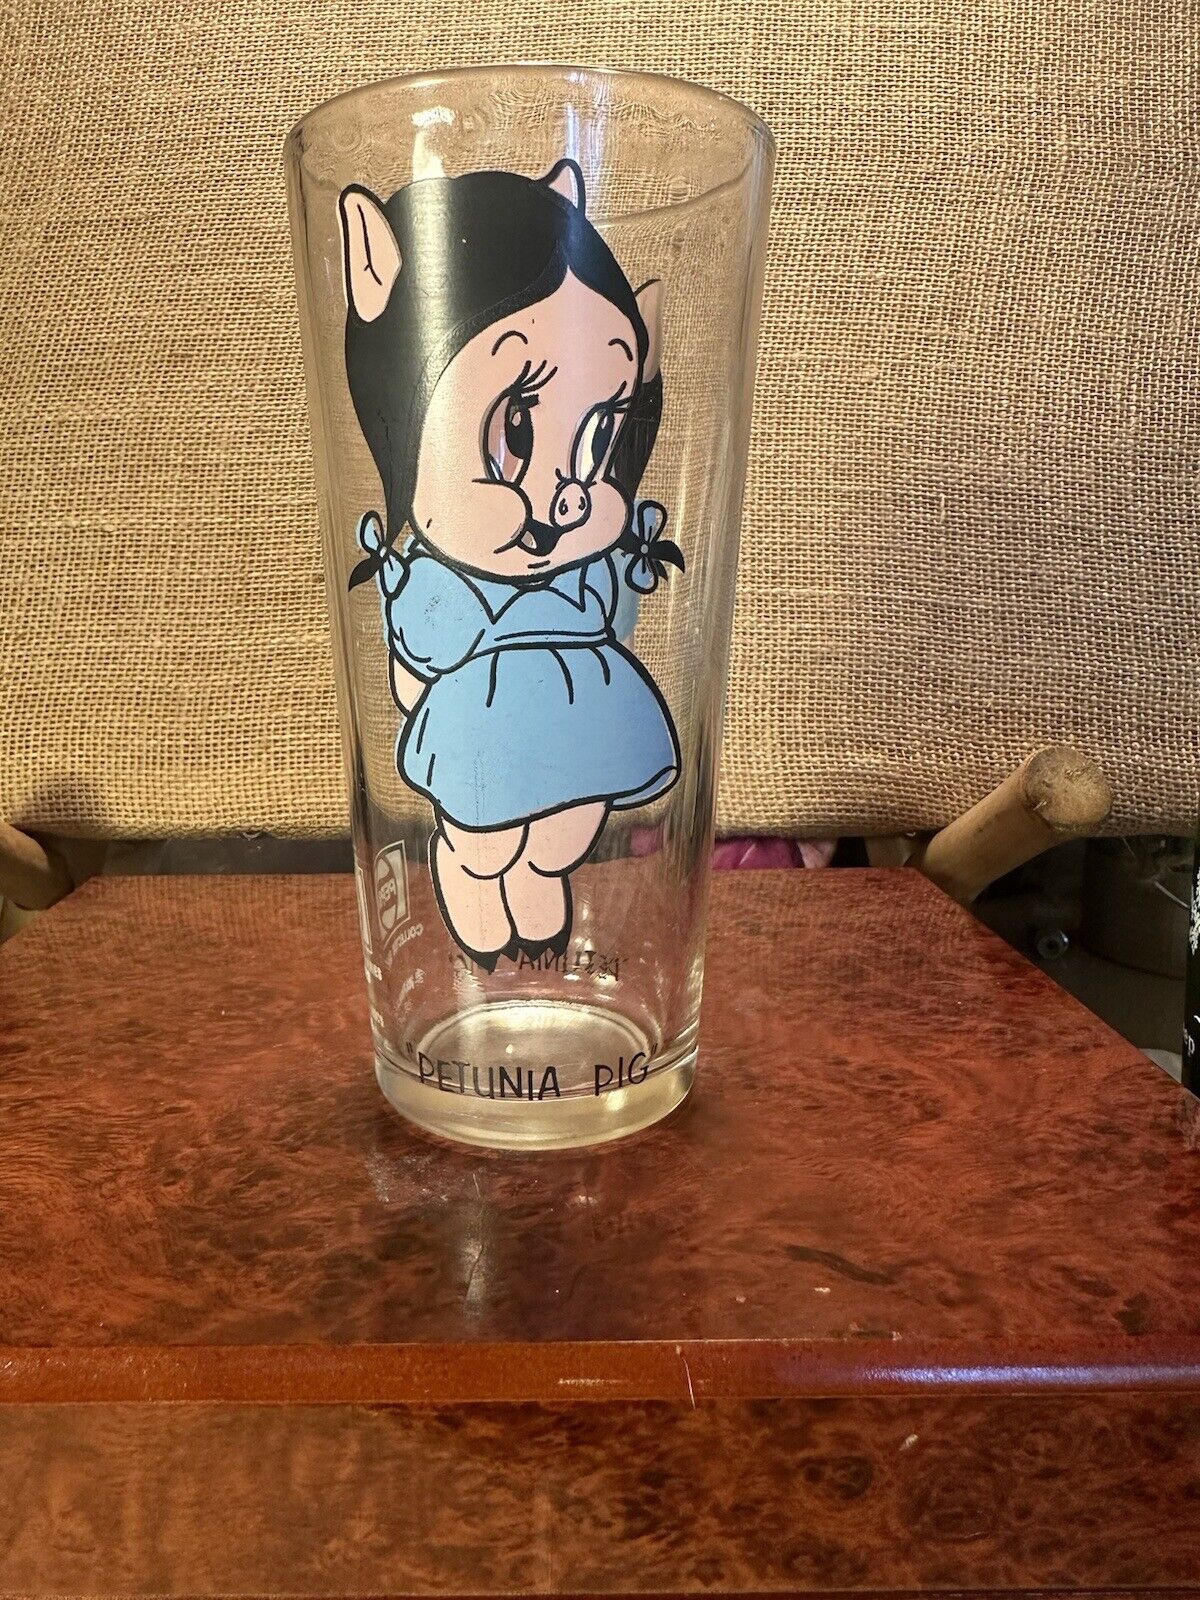 Petunia Pig Pepsi Looney Tunes Warner Bros 1973 Collector Vintage Drinking Glass